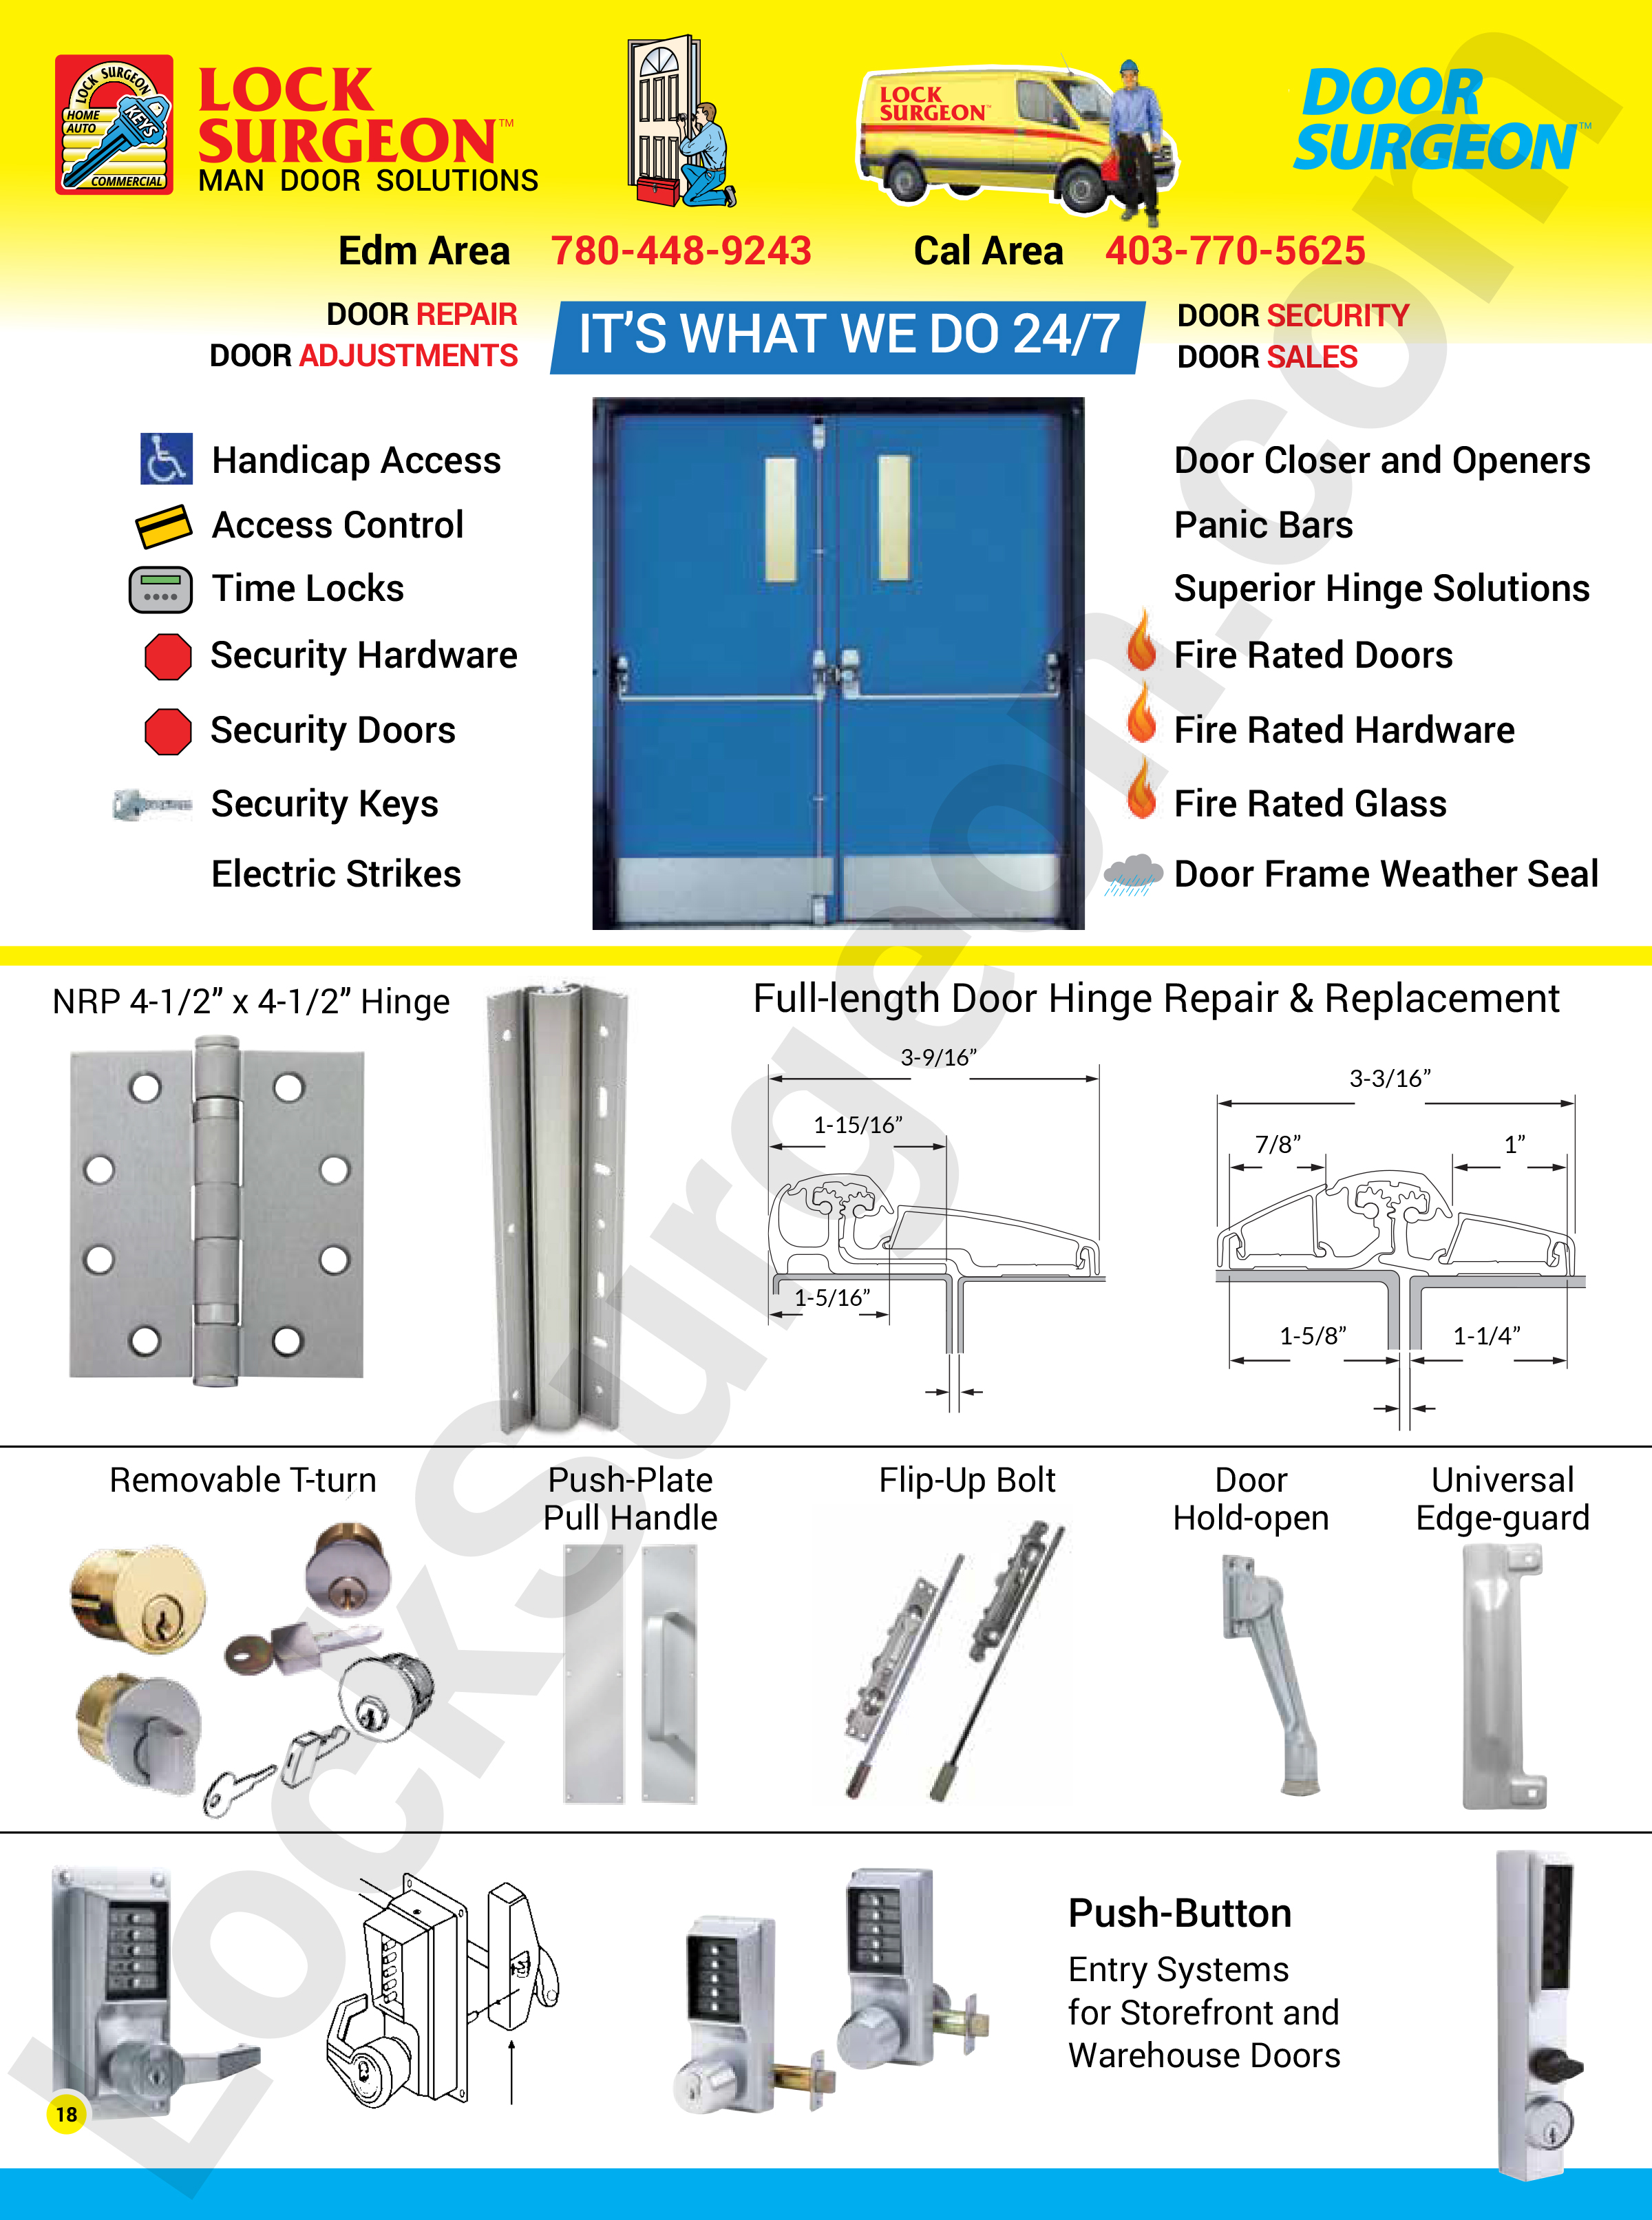 Steel doors for business and commercial properties. Repair and installation for steel doors.